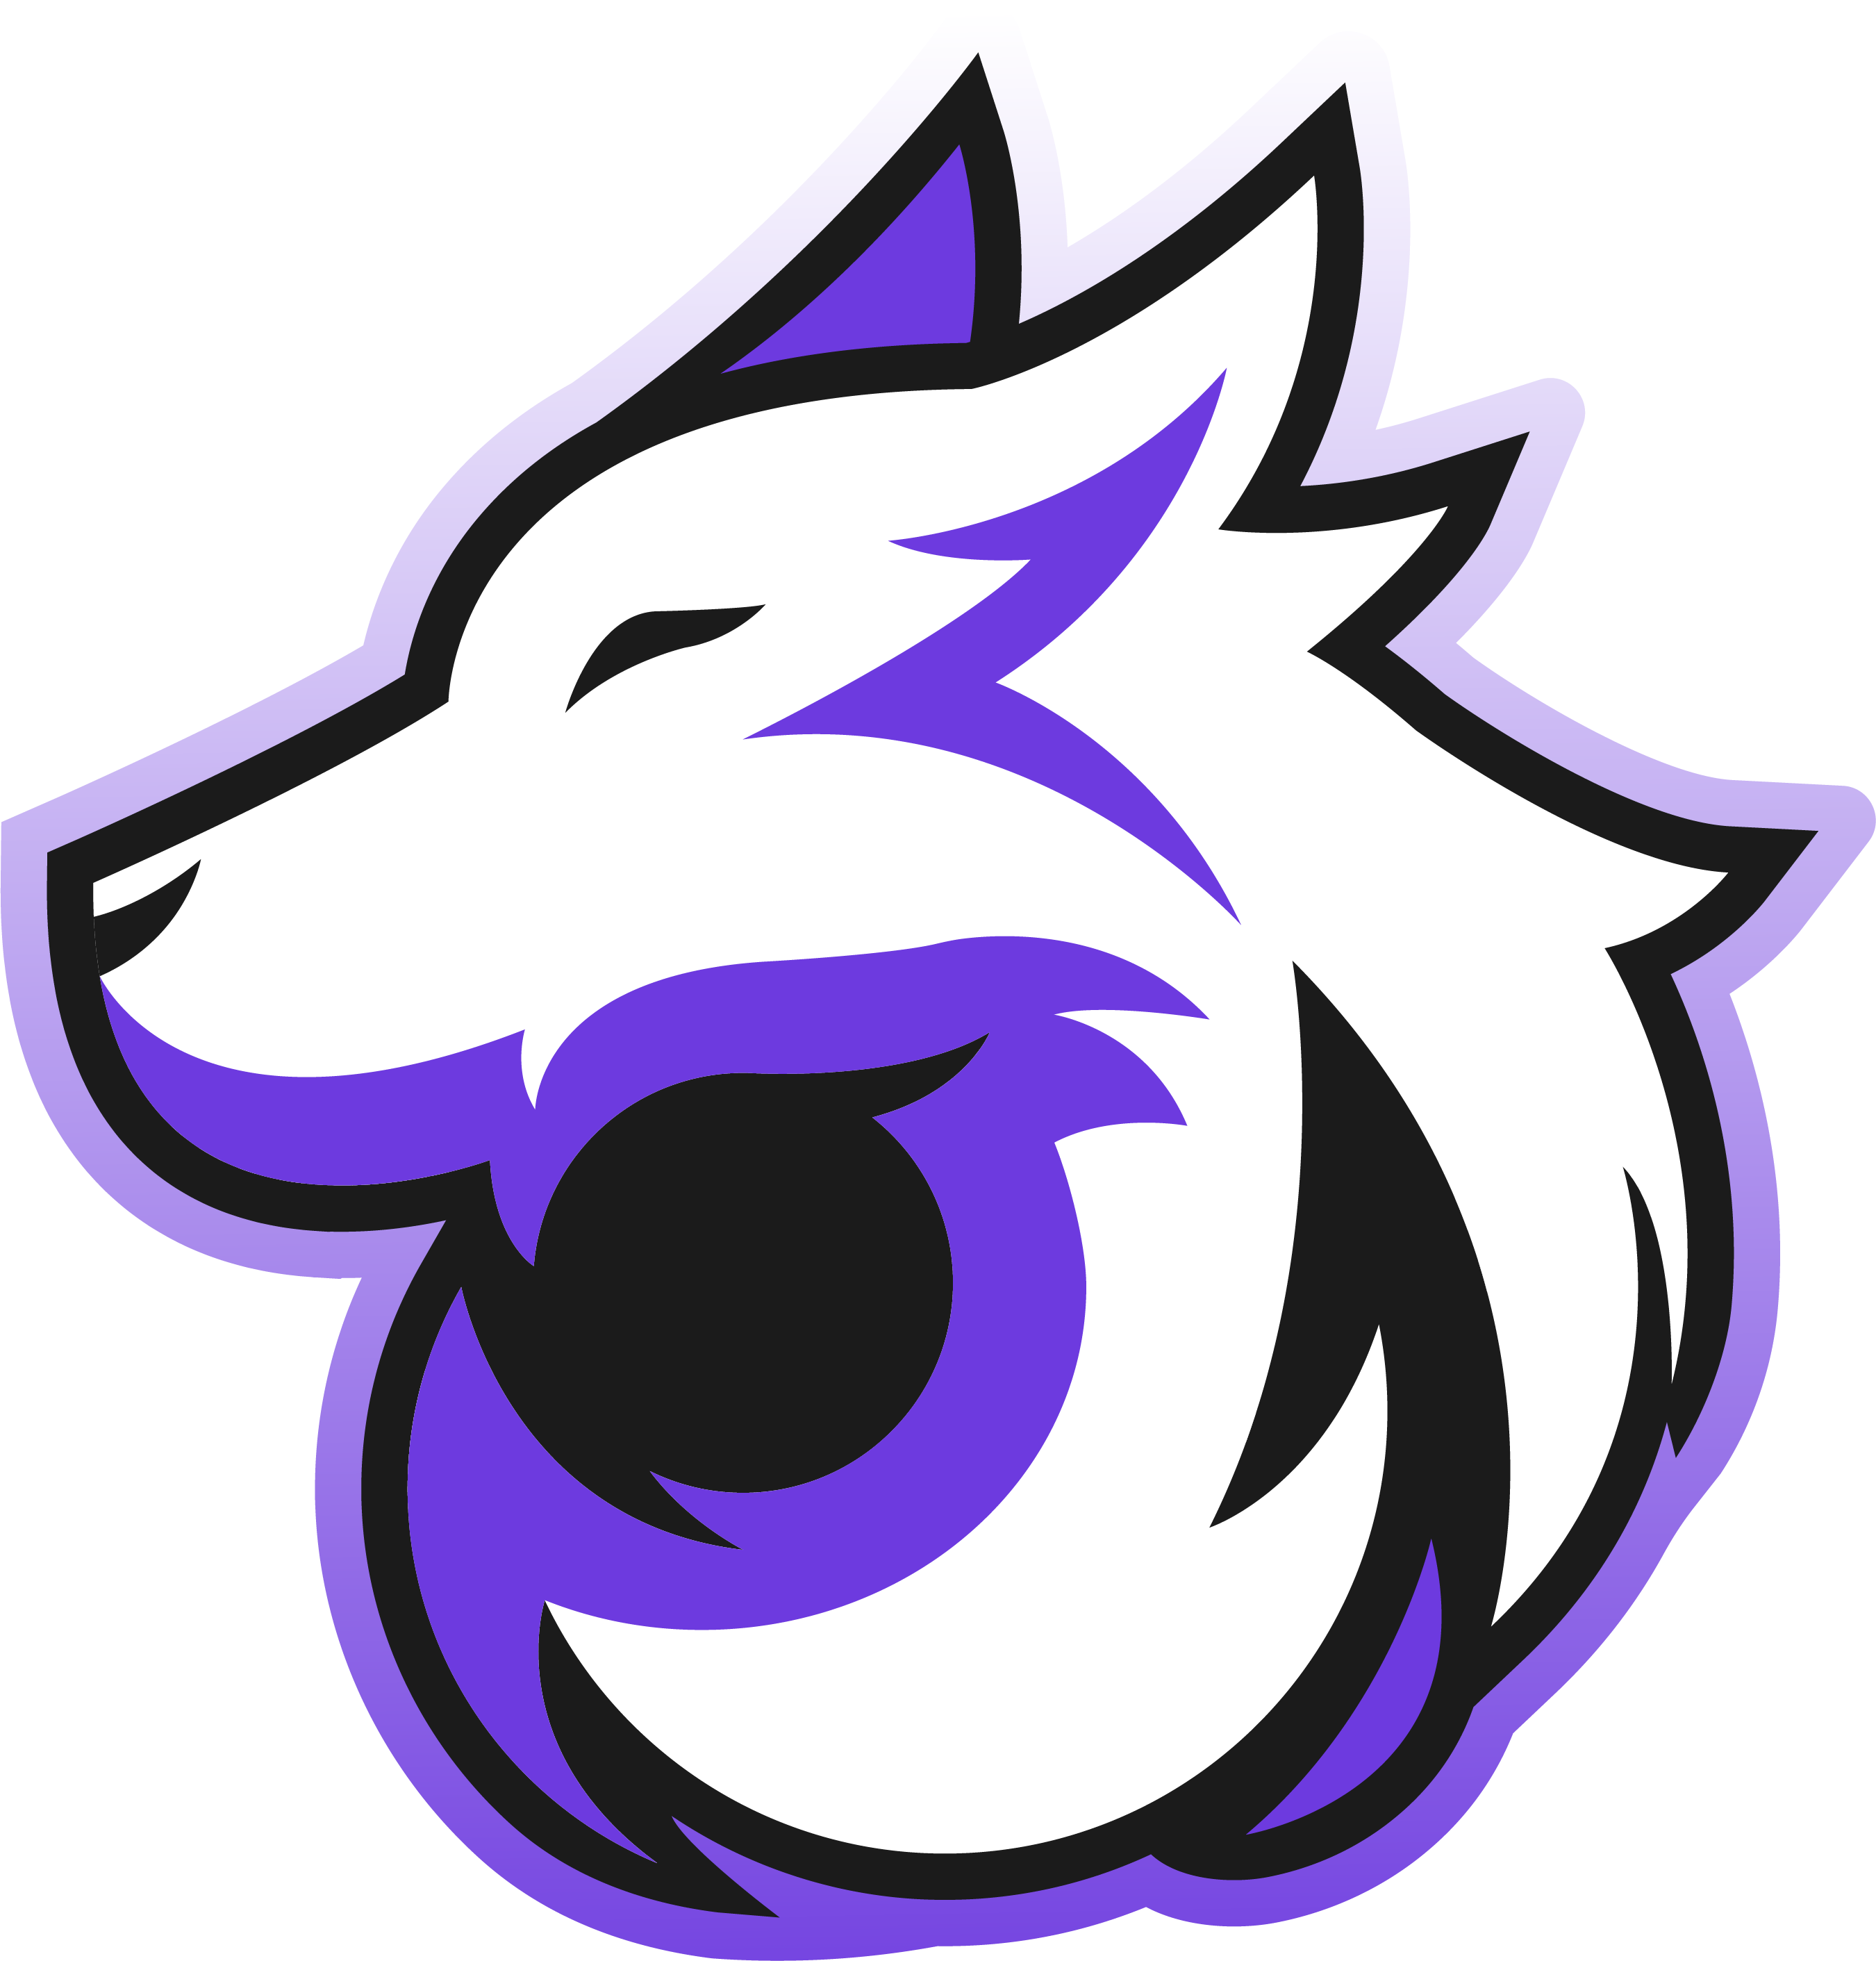 ZERONE team logo